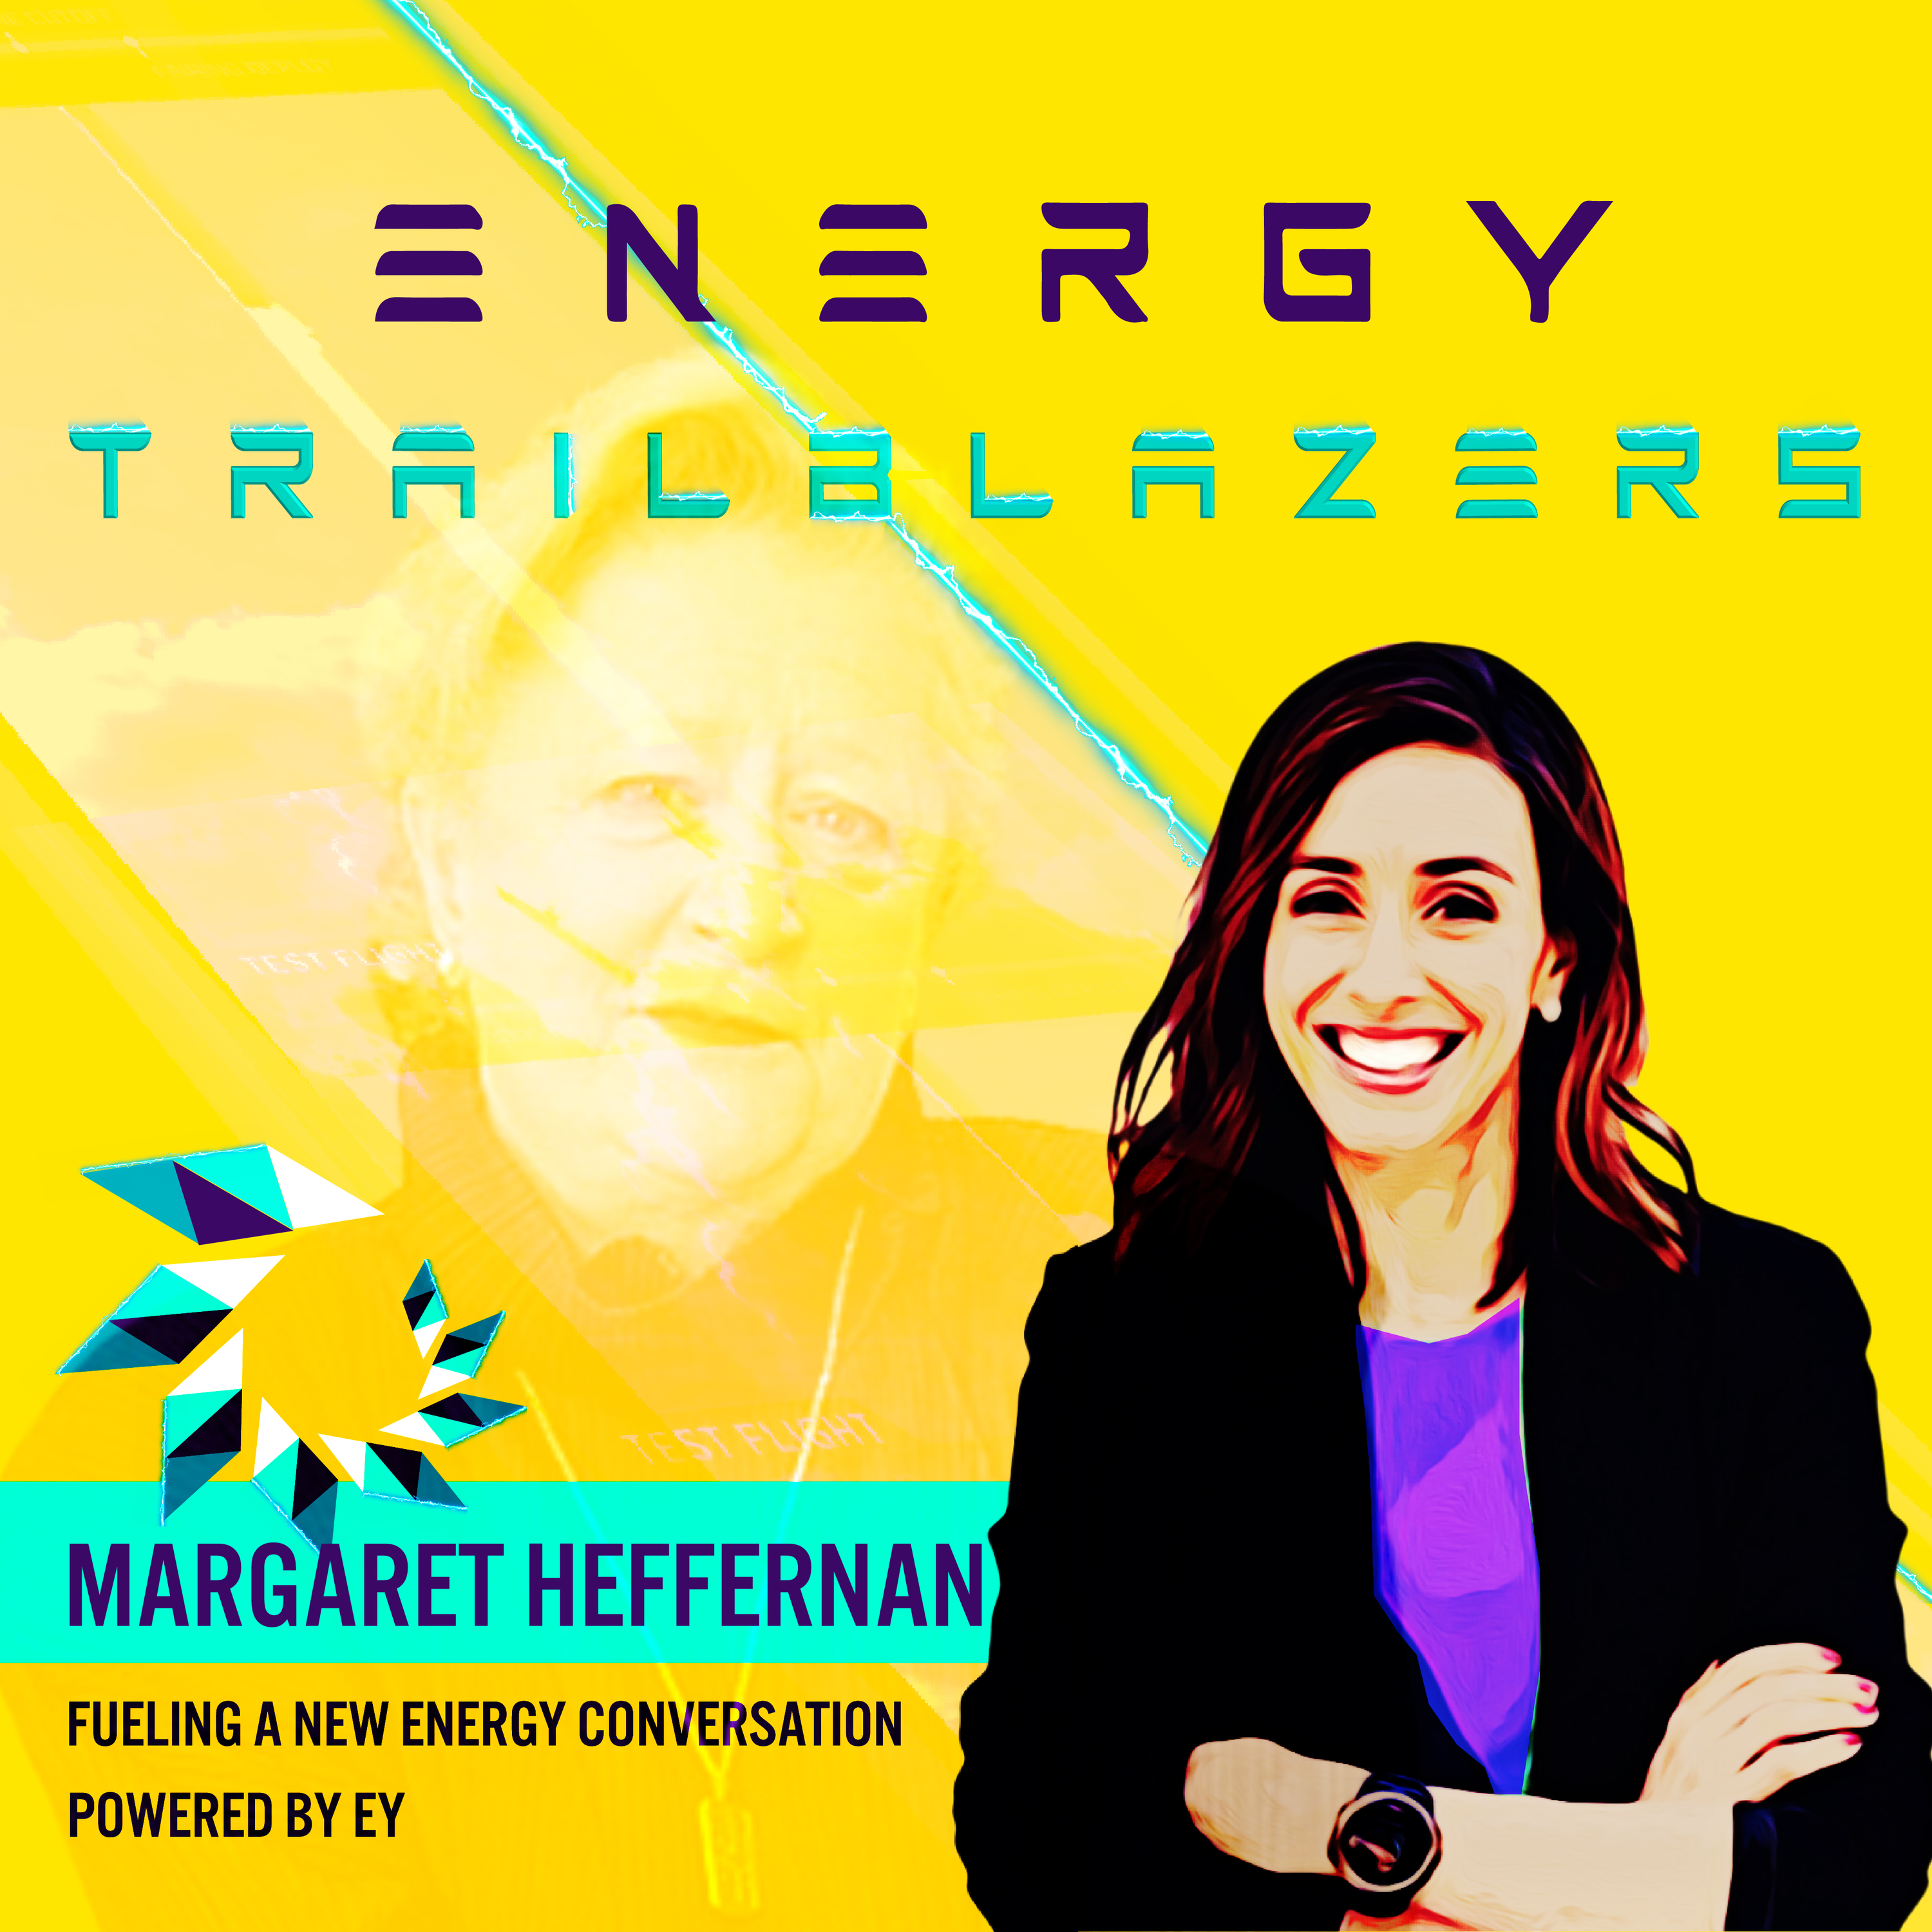 Trailblazer 07 | Margaret Heffernan | Fierce Educator & Formidable Entrepreneur